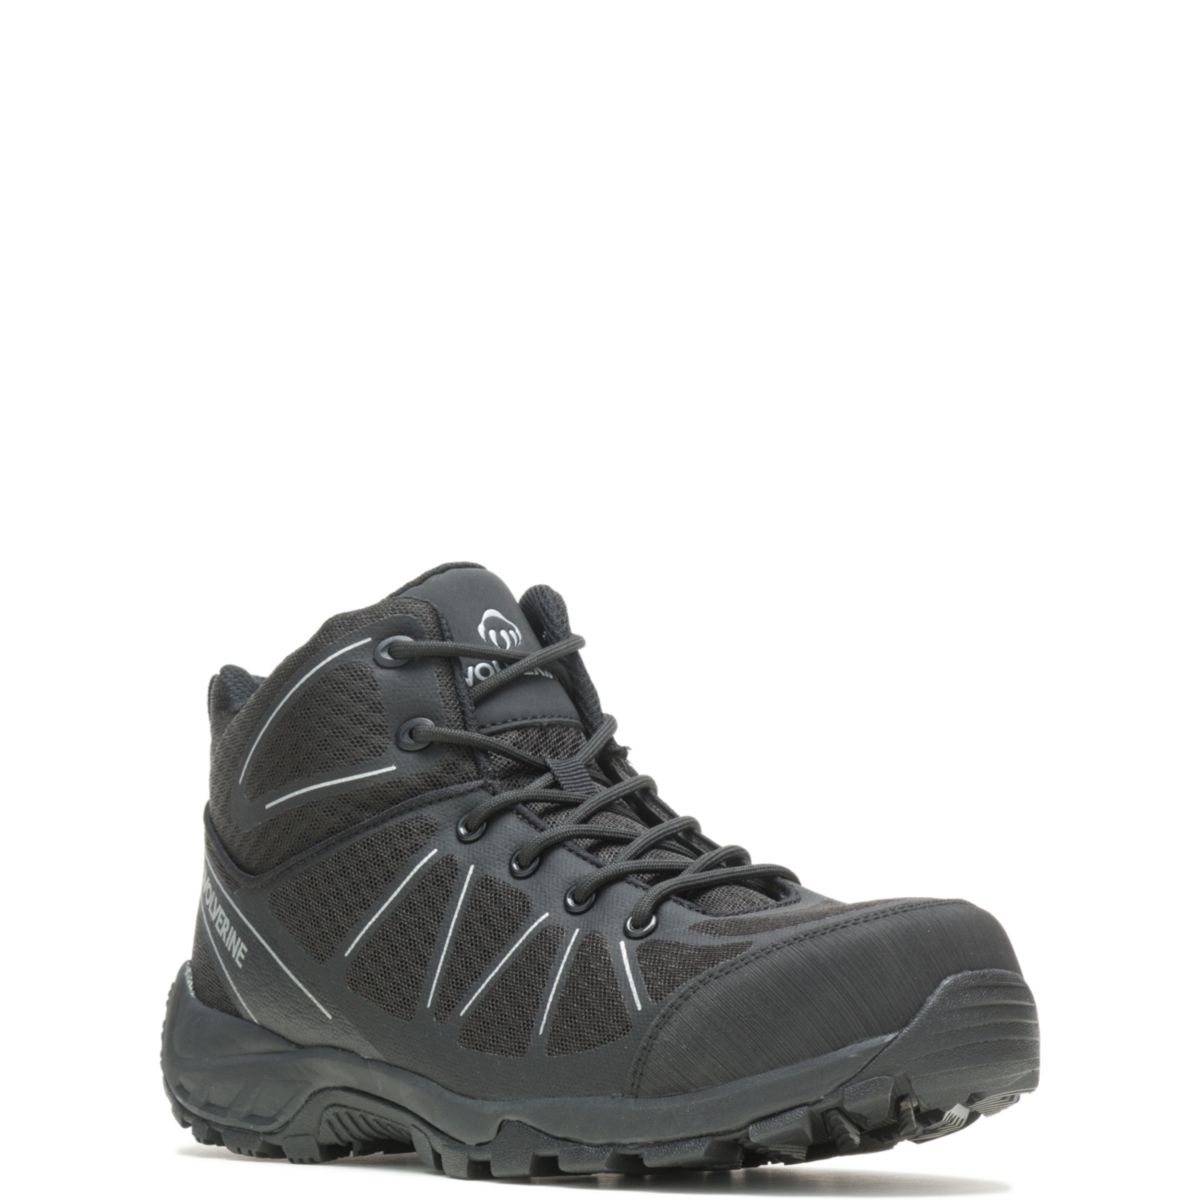 WOLVERINE Men's Amherst Ii CarbonMAXÂ® Composite Toe Work Boot Black - W201150 Varies BLACK - BLACK, 13